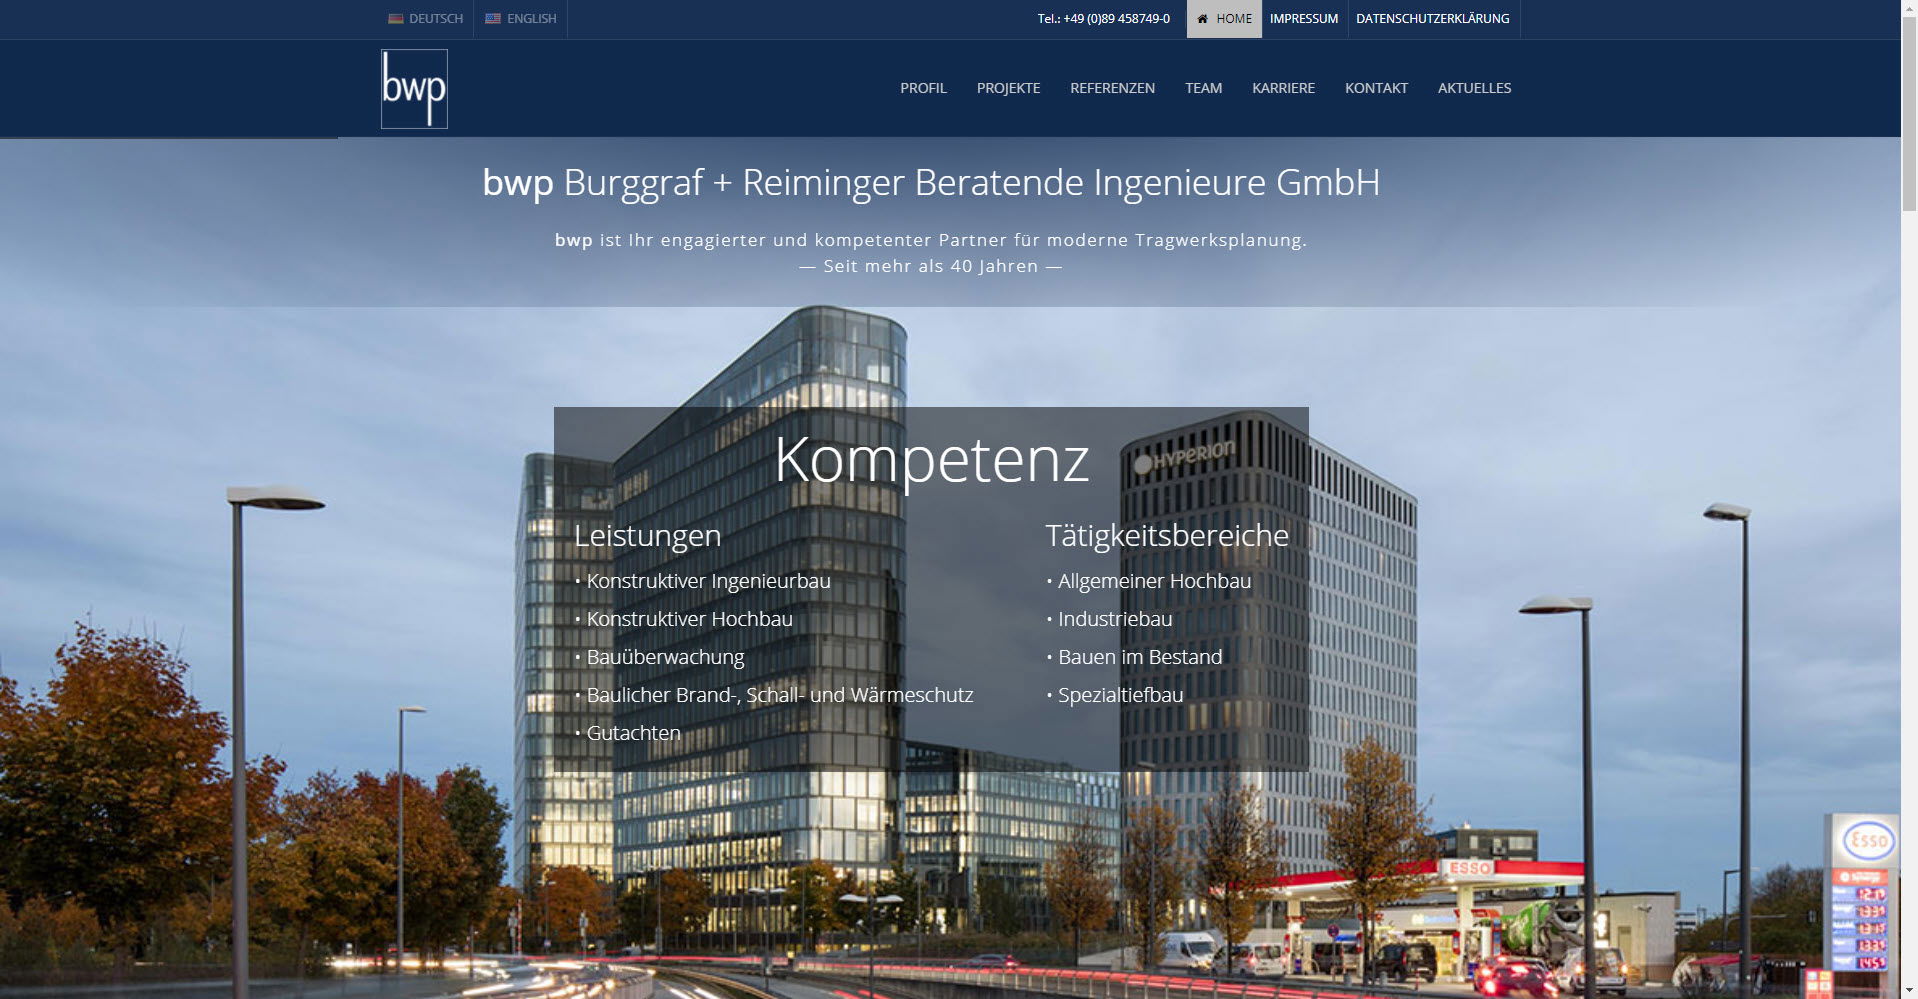 bwp Burggraf + Reiminger beratende Ingenieure GmbH